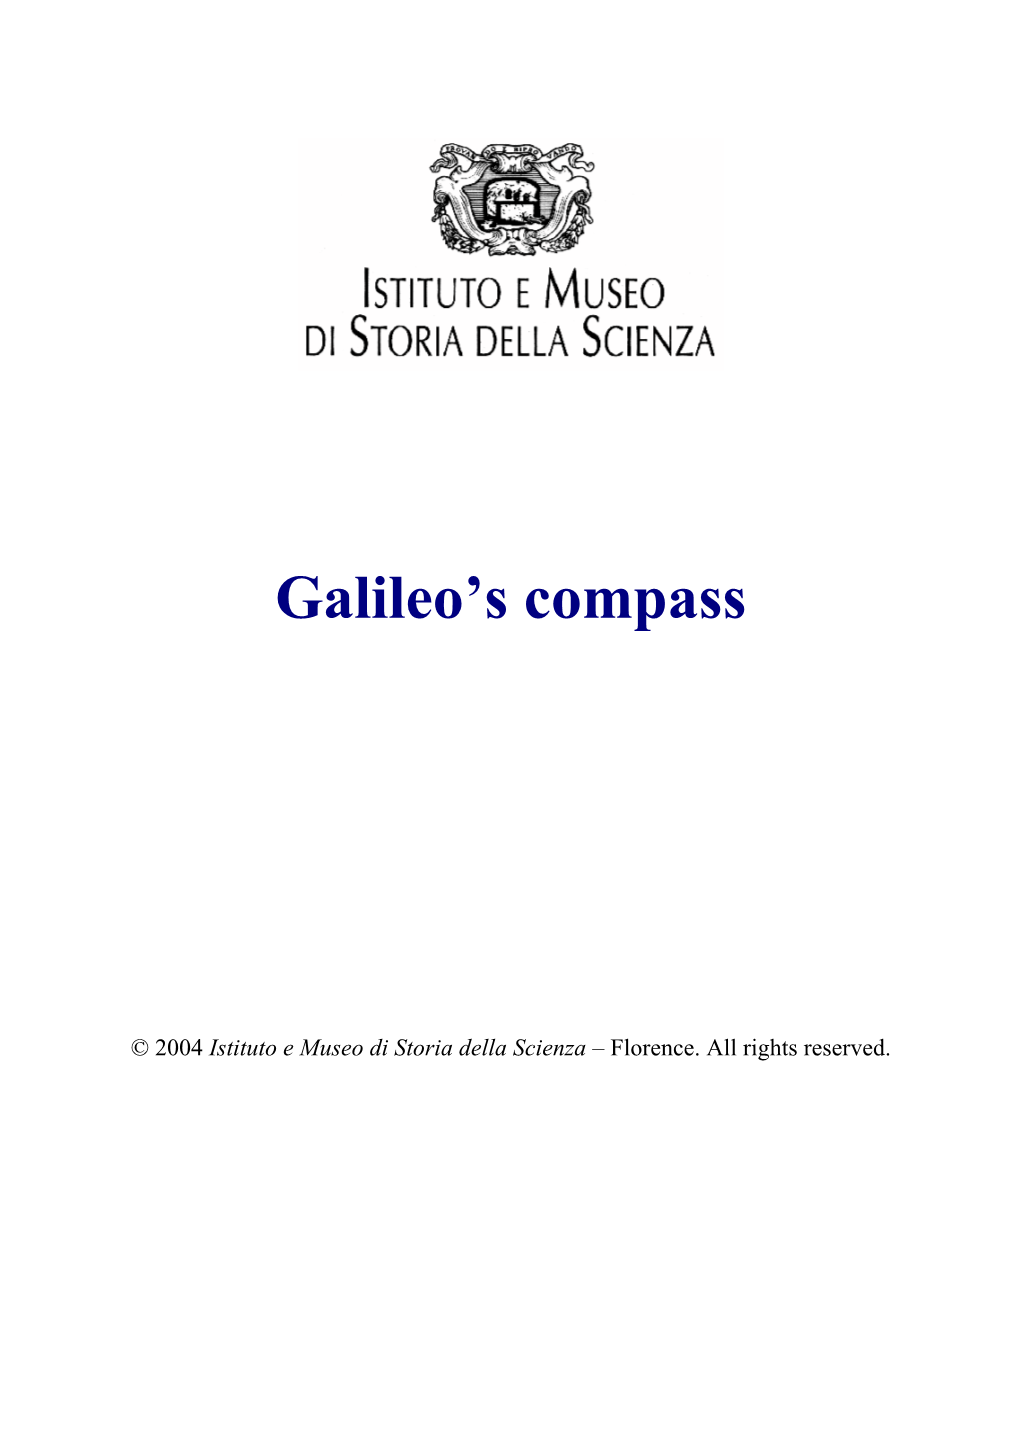 Galileo's Compass